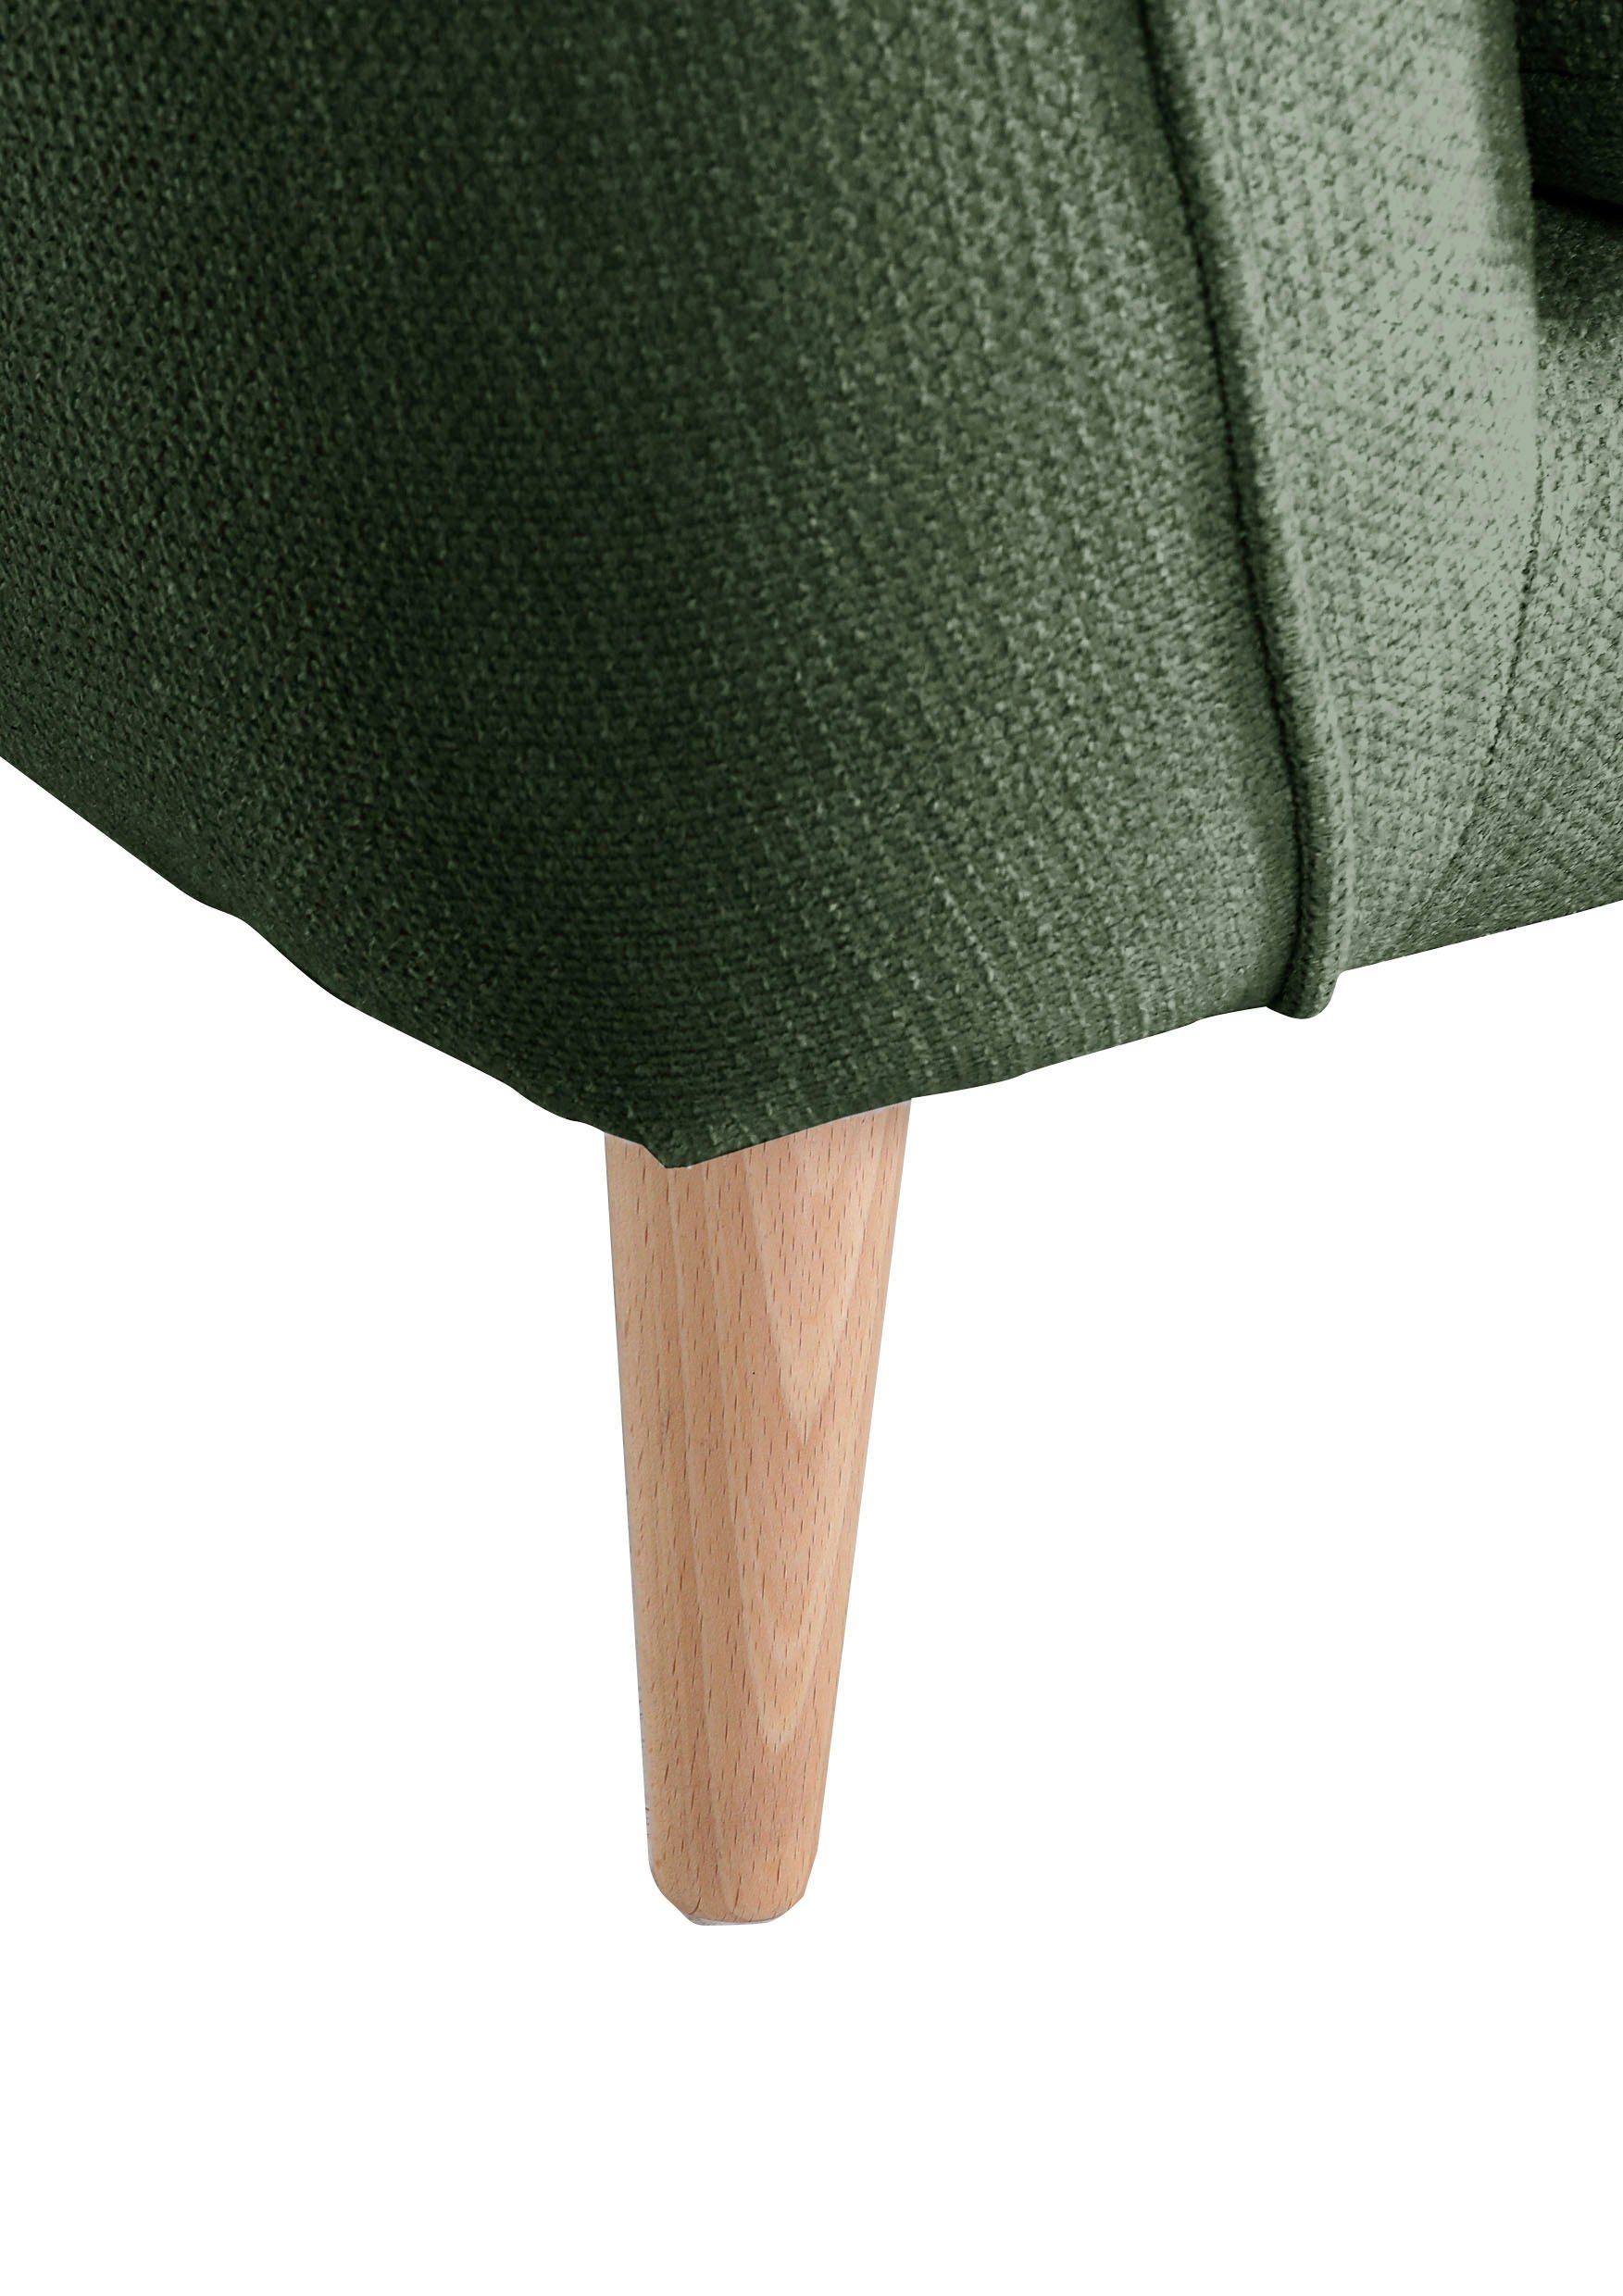 3-Sitzer | Factory grün grün | grün Gutmann